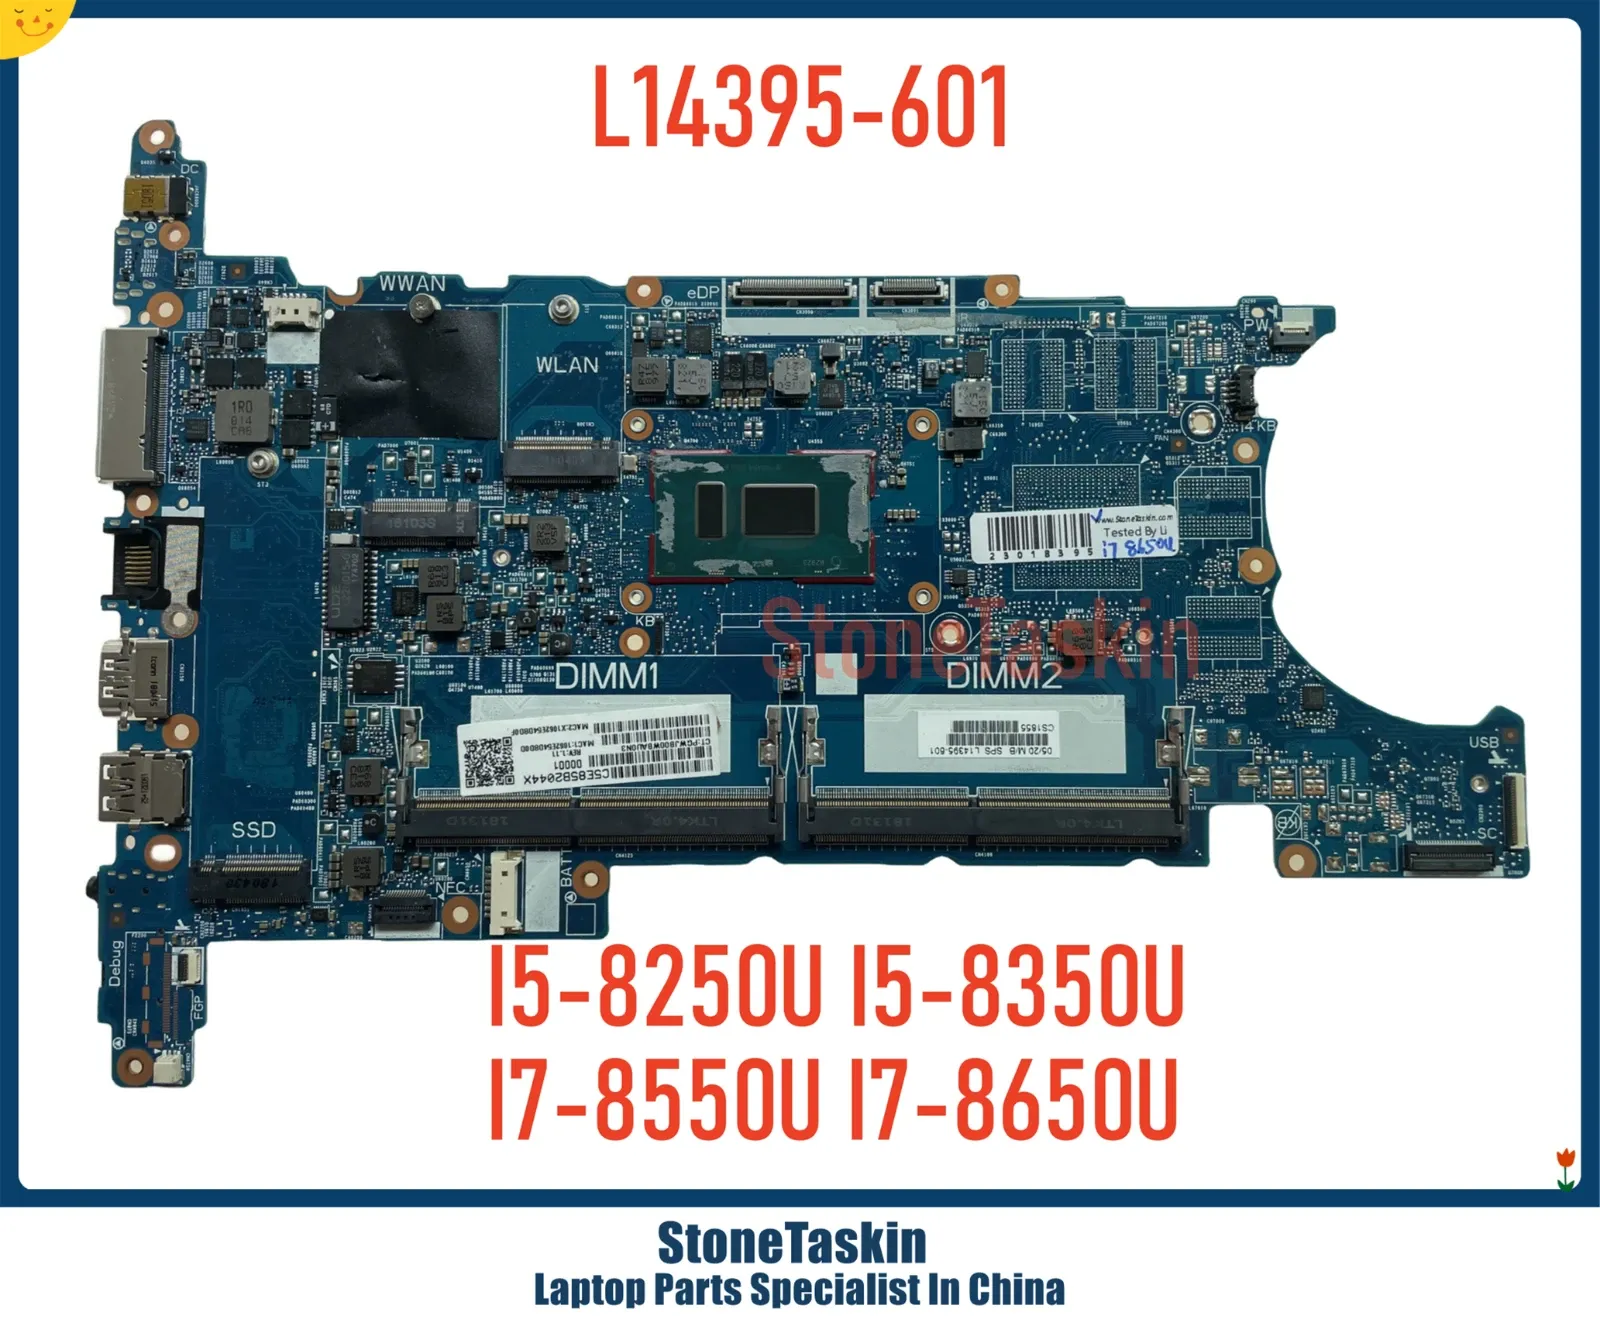 Motherboard Stonetaskin L14395601 für HP ZBook 14U G5 850 G5 Laptop Motherboard 6050A2945601MBA01 I58250U I78650U DDR4 Mainboard MB